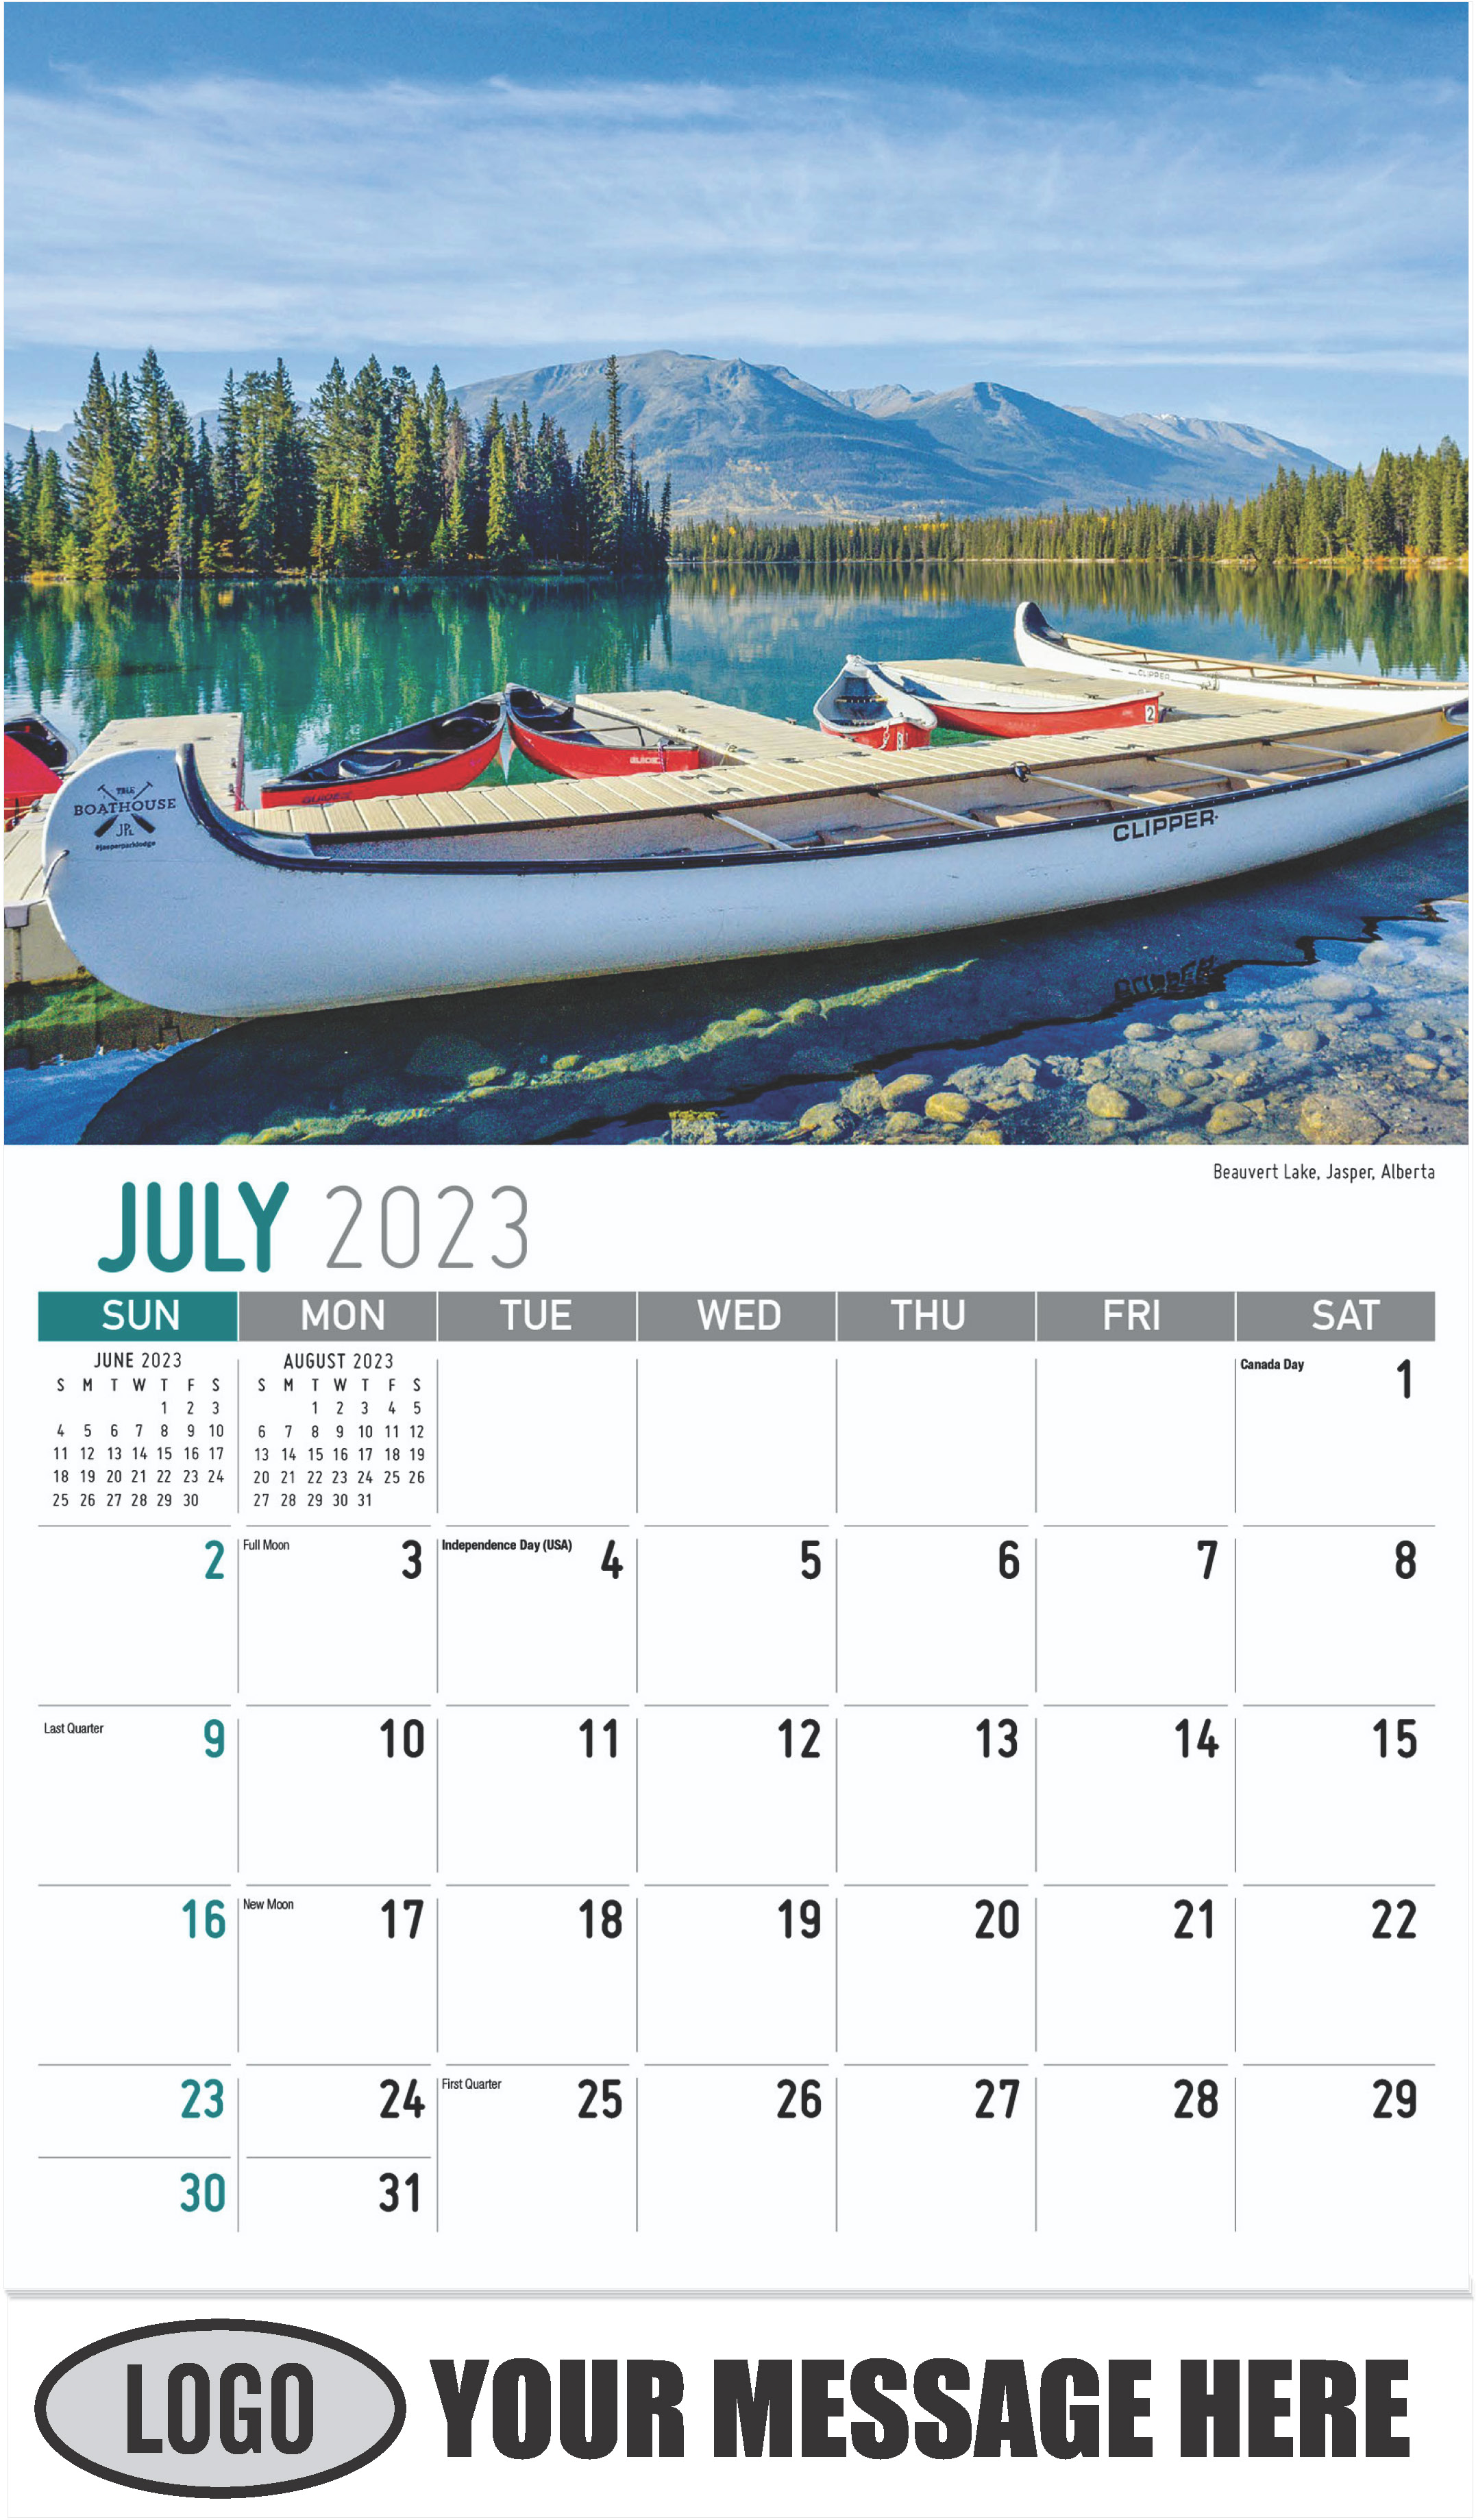 Beauvert Lake, Jasper, Alberta - July - Scenes of Western Canada 2023 Promotional Calendar